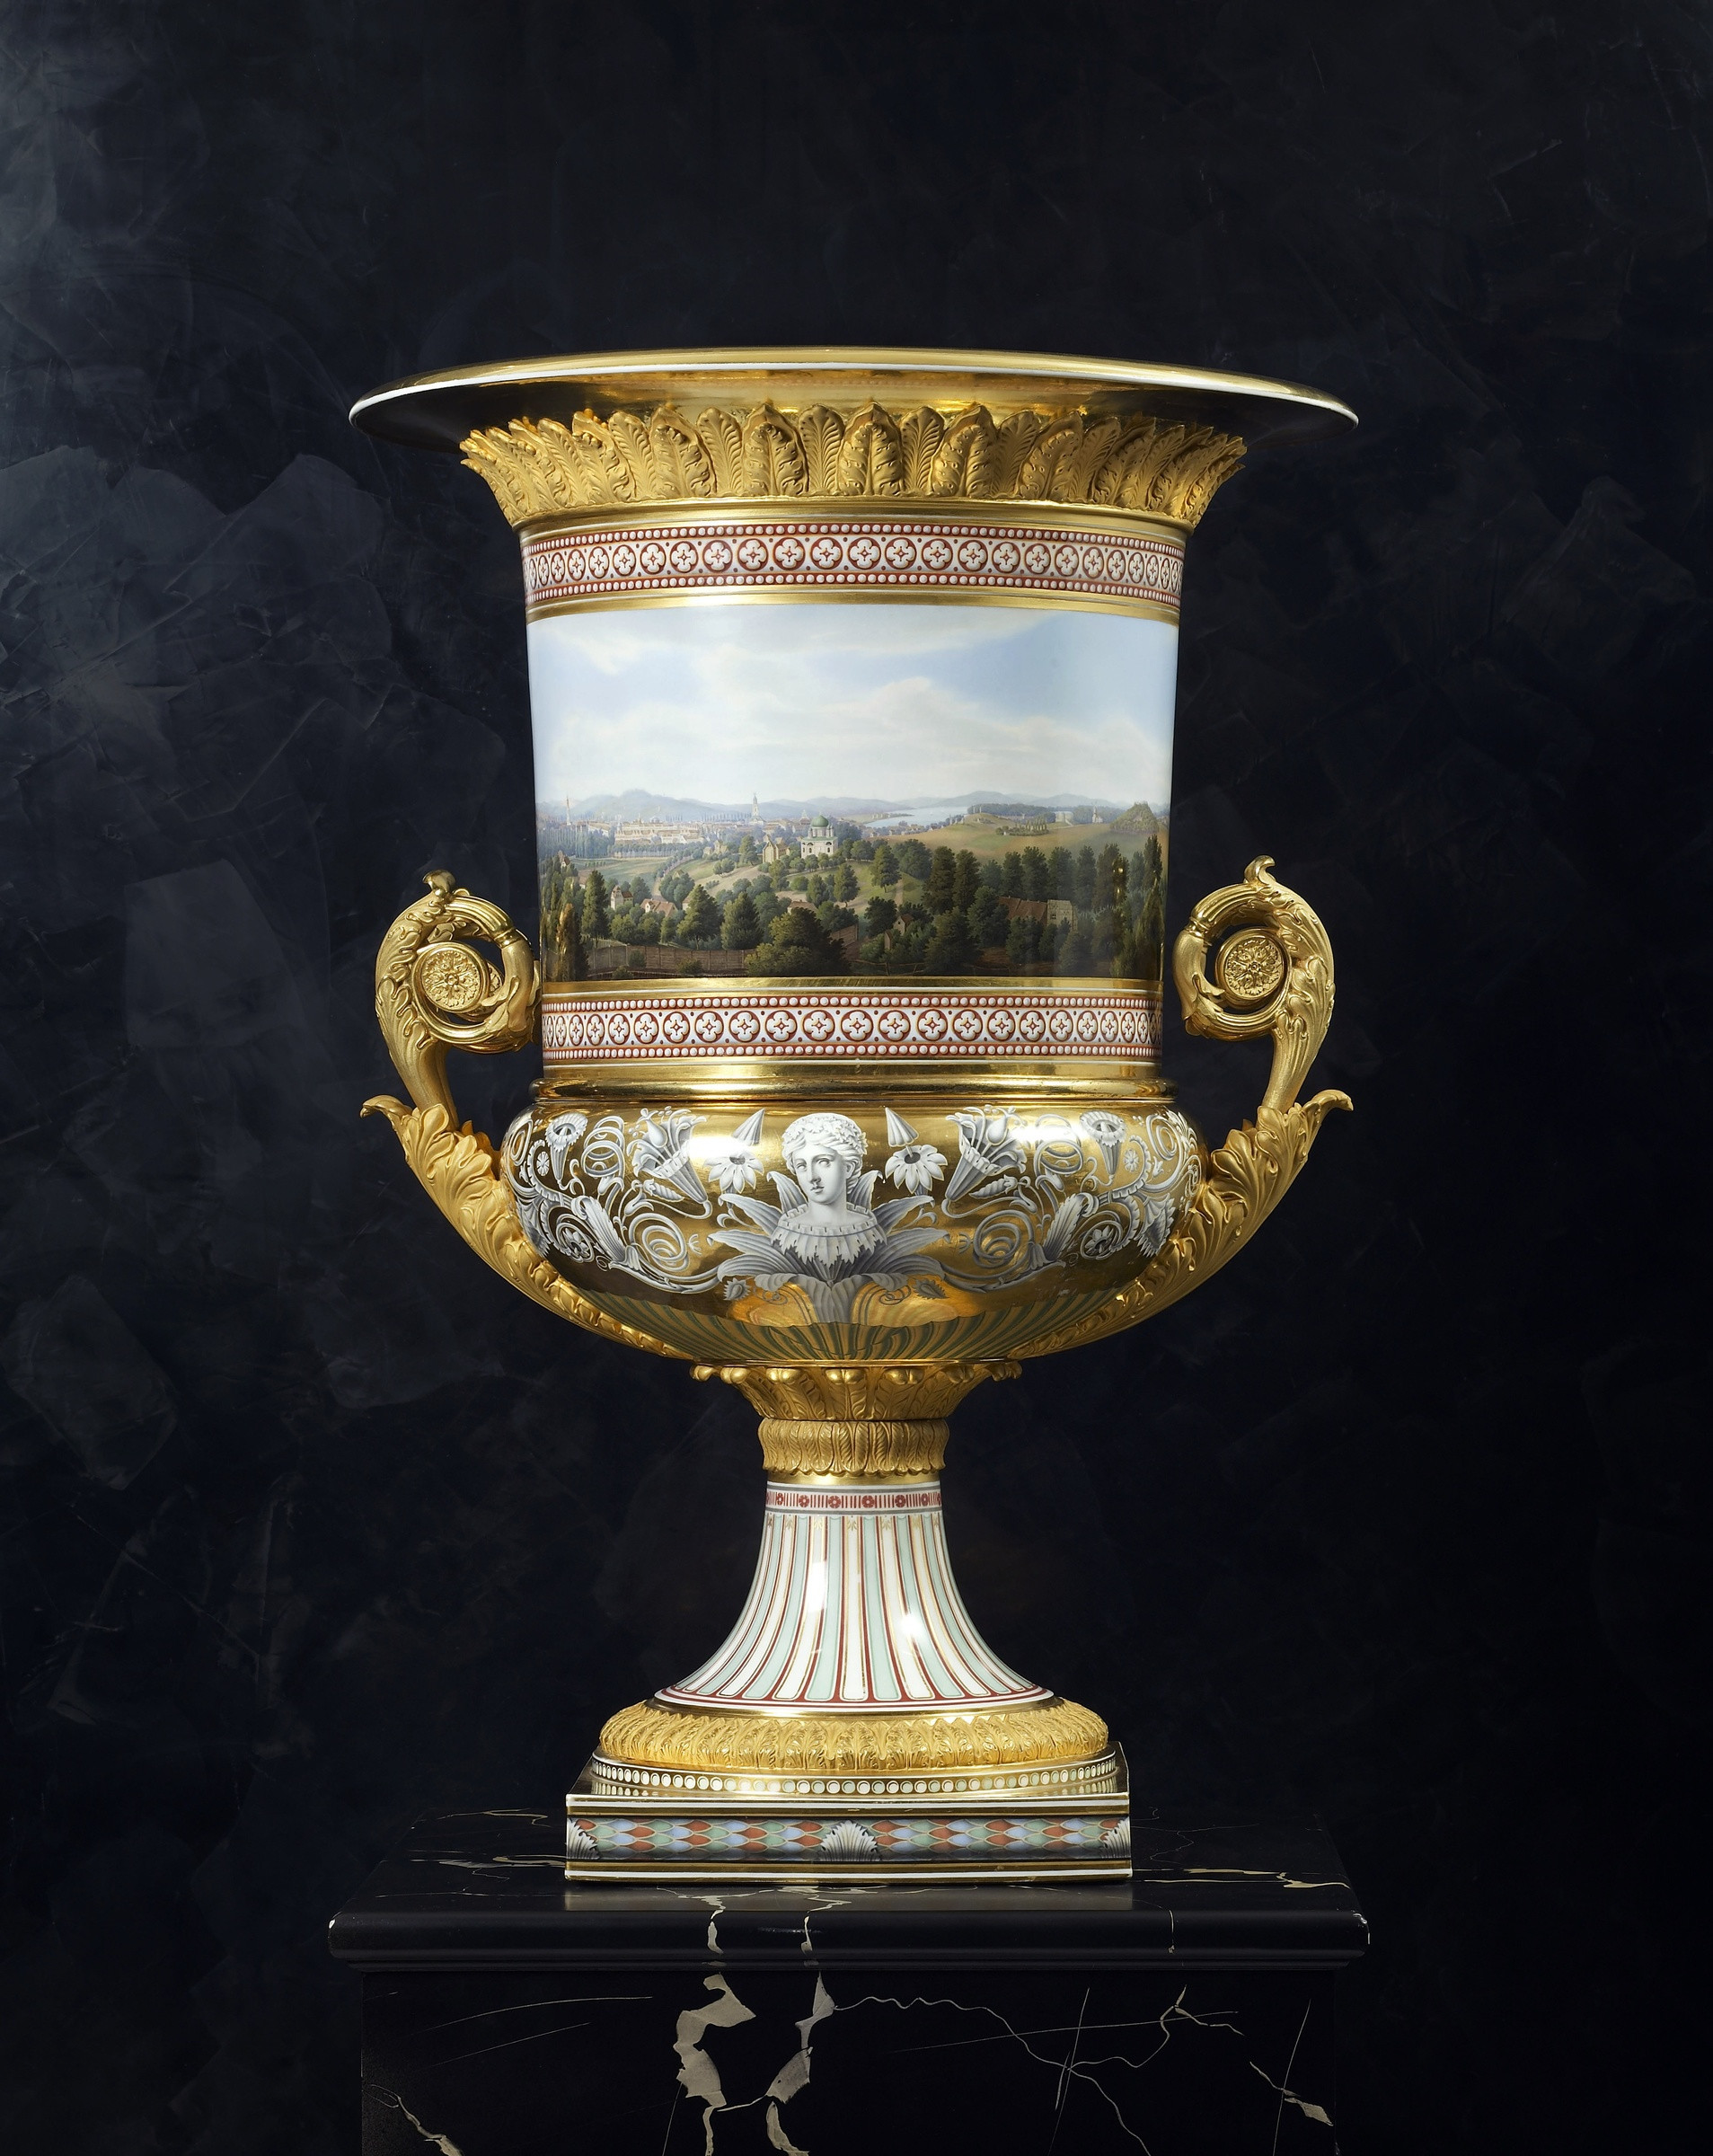 antique french porcelain vases of k p m ka¶nigliche porzellan manufaktur berlin a classical medici inside a classical medici vase made by the royal berlin porcelain manufactory